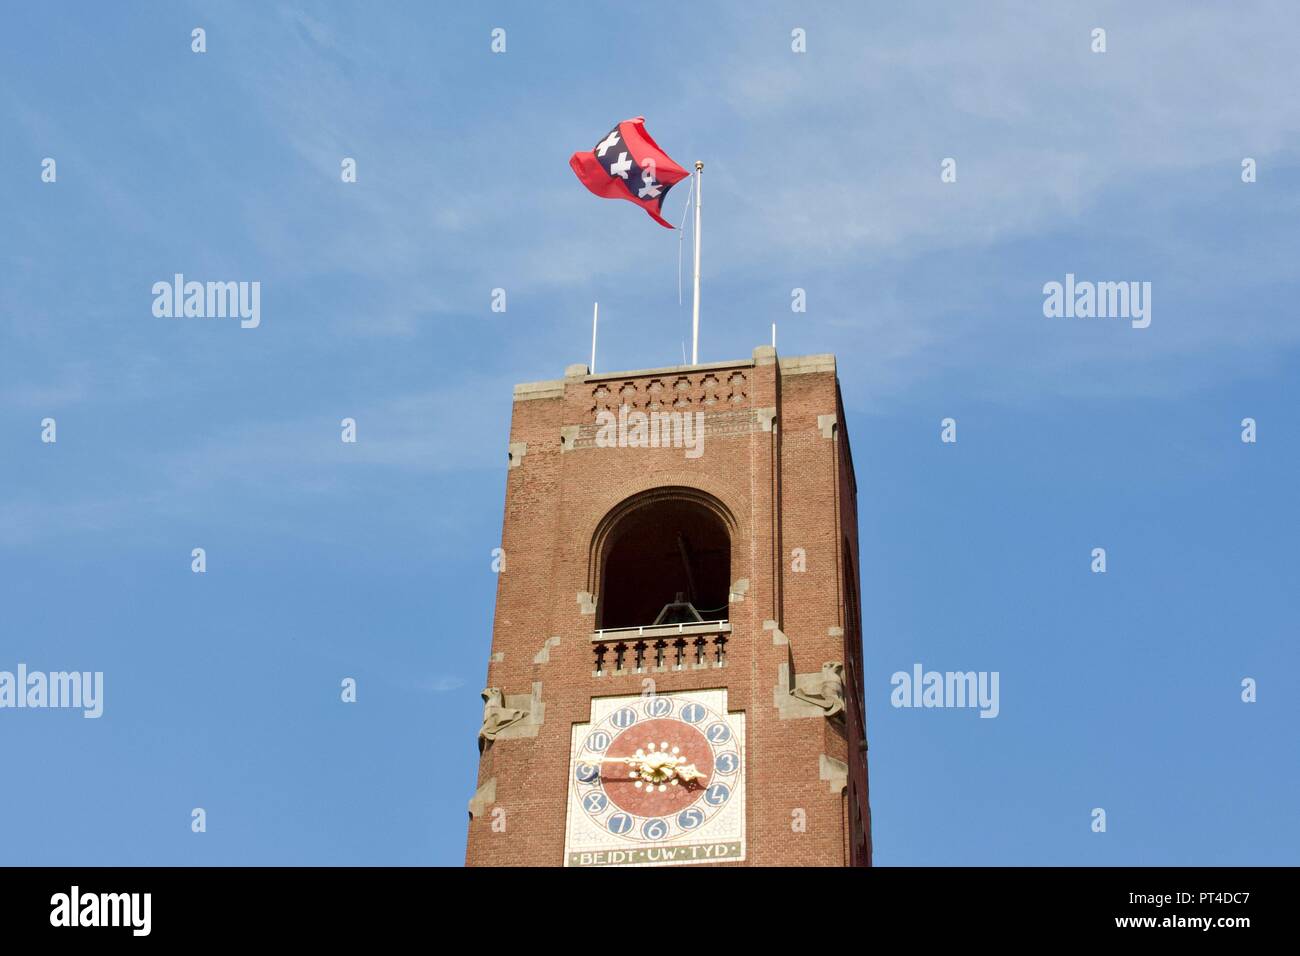 Beurs van Berlage Toren or tower with the Amsterdam flag on top blowing in the wind. Beurs van Berlage is the former stock exchange building. Stock Photo